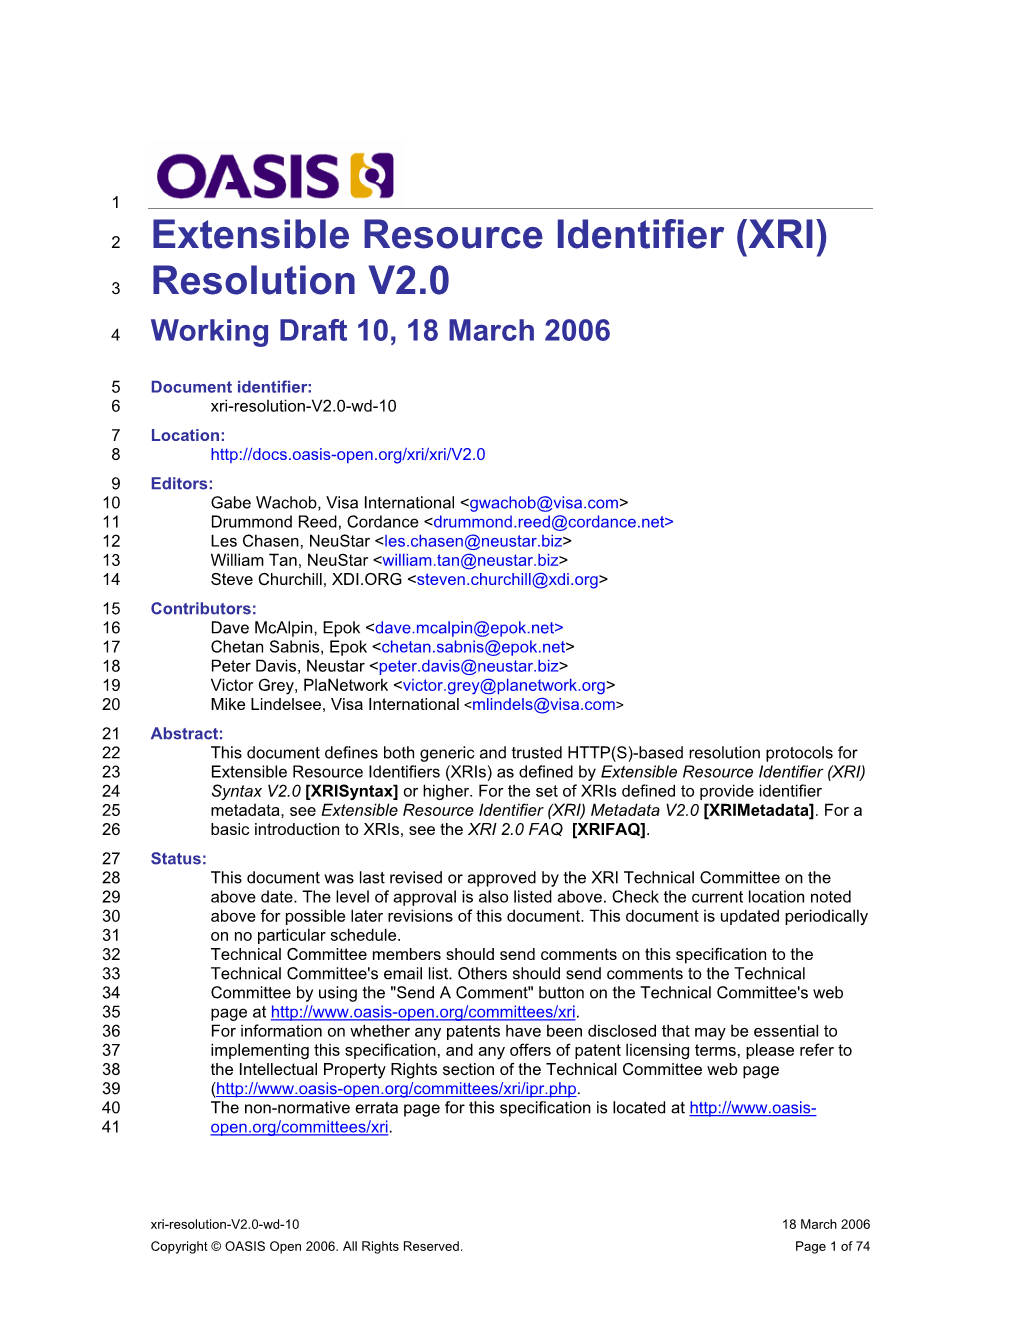 Extensible Resource Identifier (XRI) Resolution V2.0